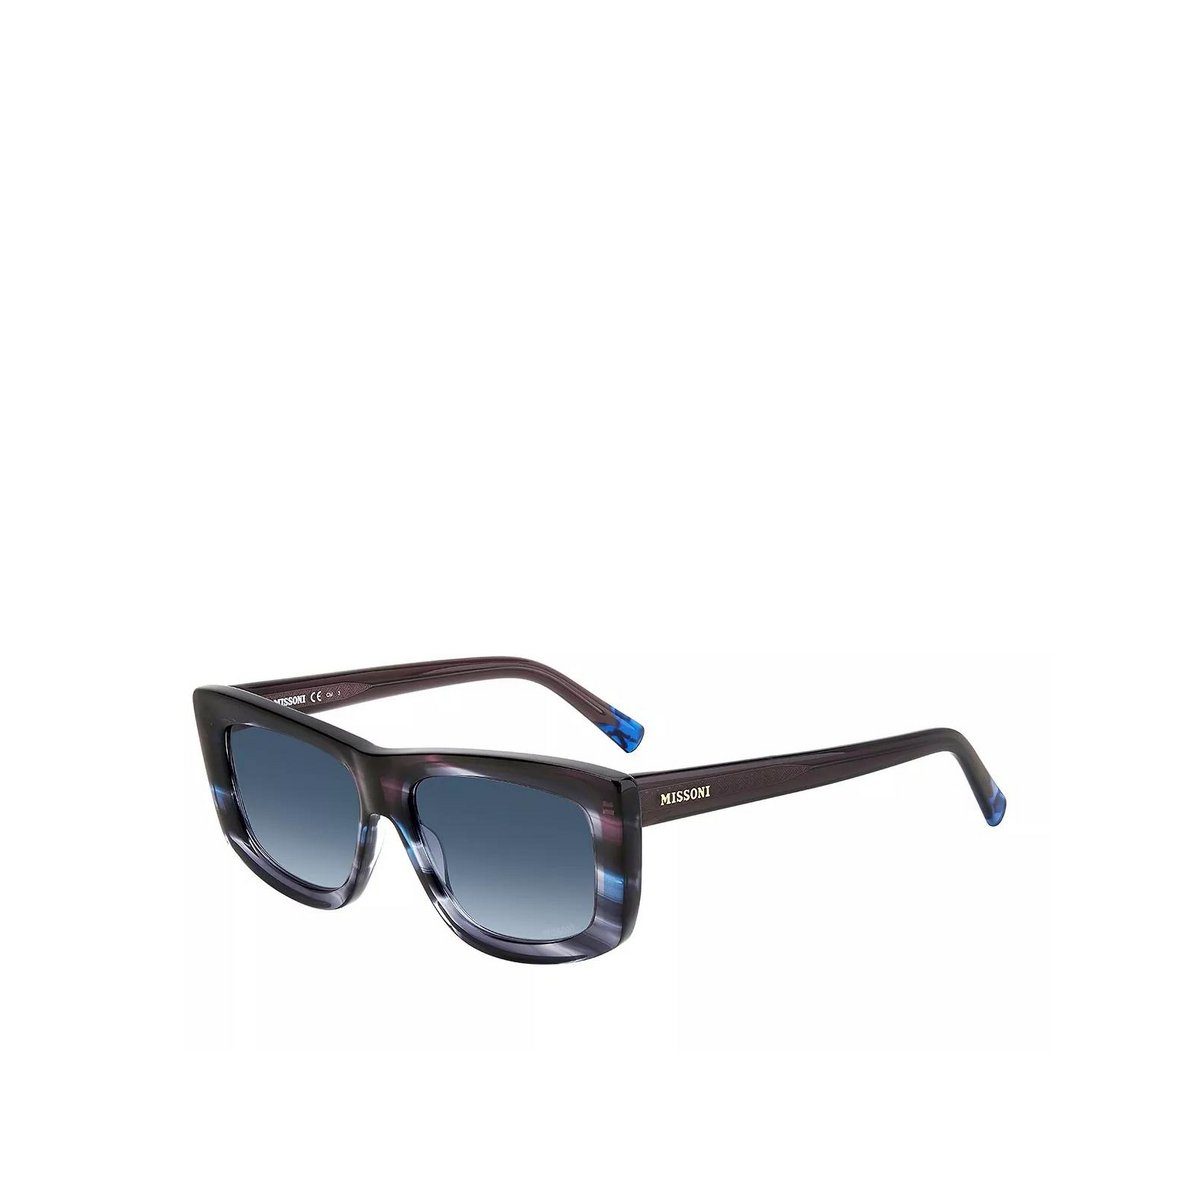 Missoni Sonnenbrille blau (1-St)